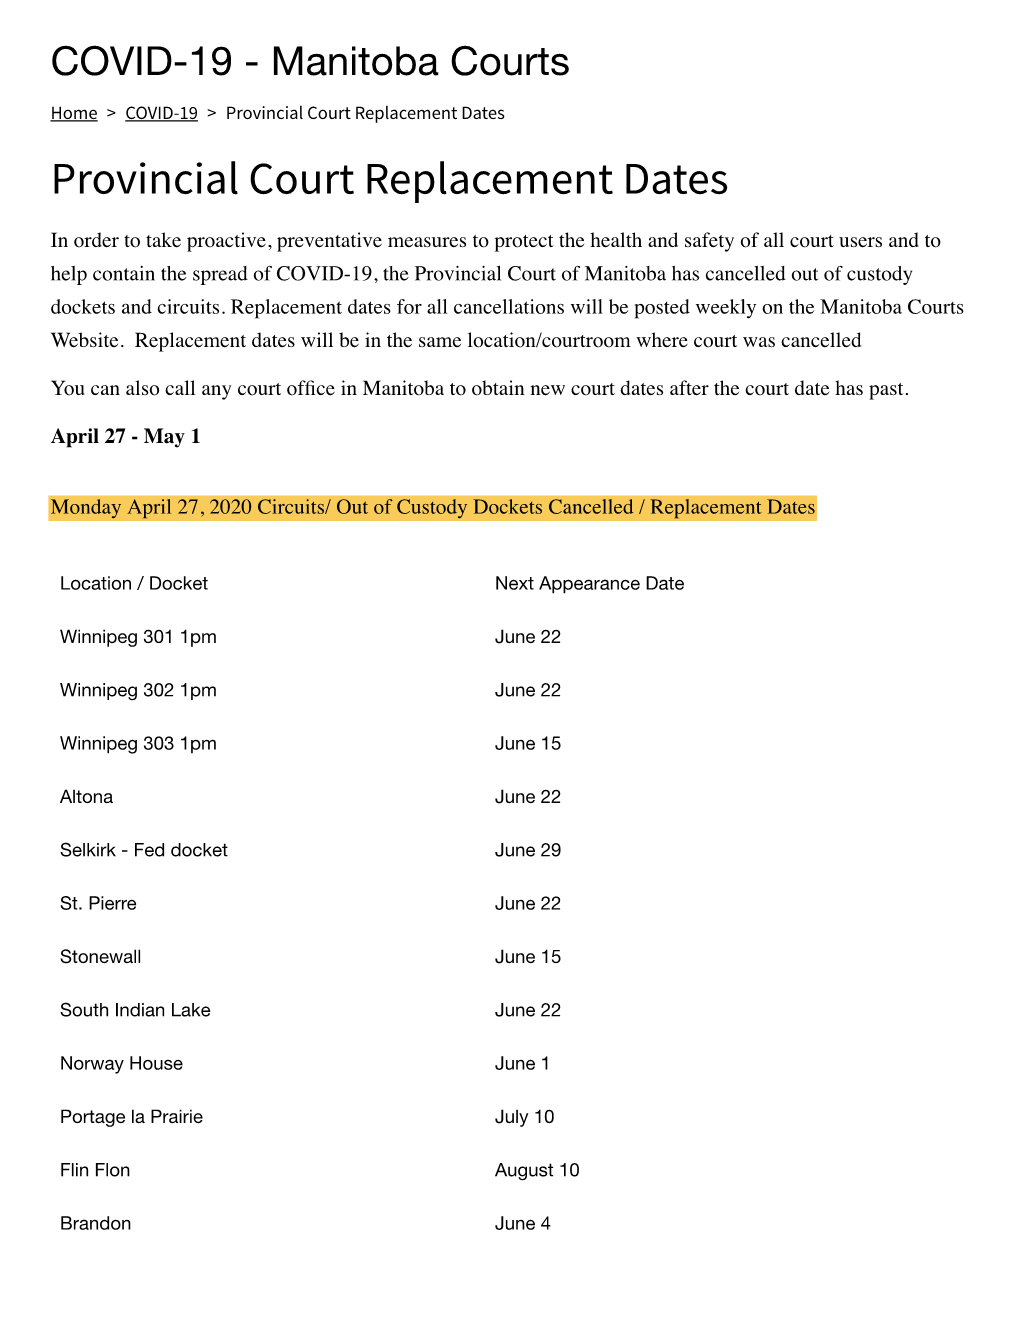 Provincial Court Replacement Dates Provincial Court Replacement Dates